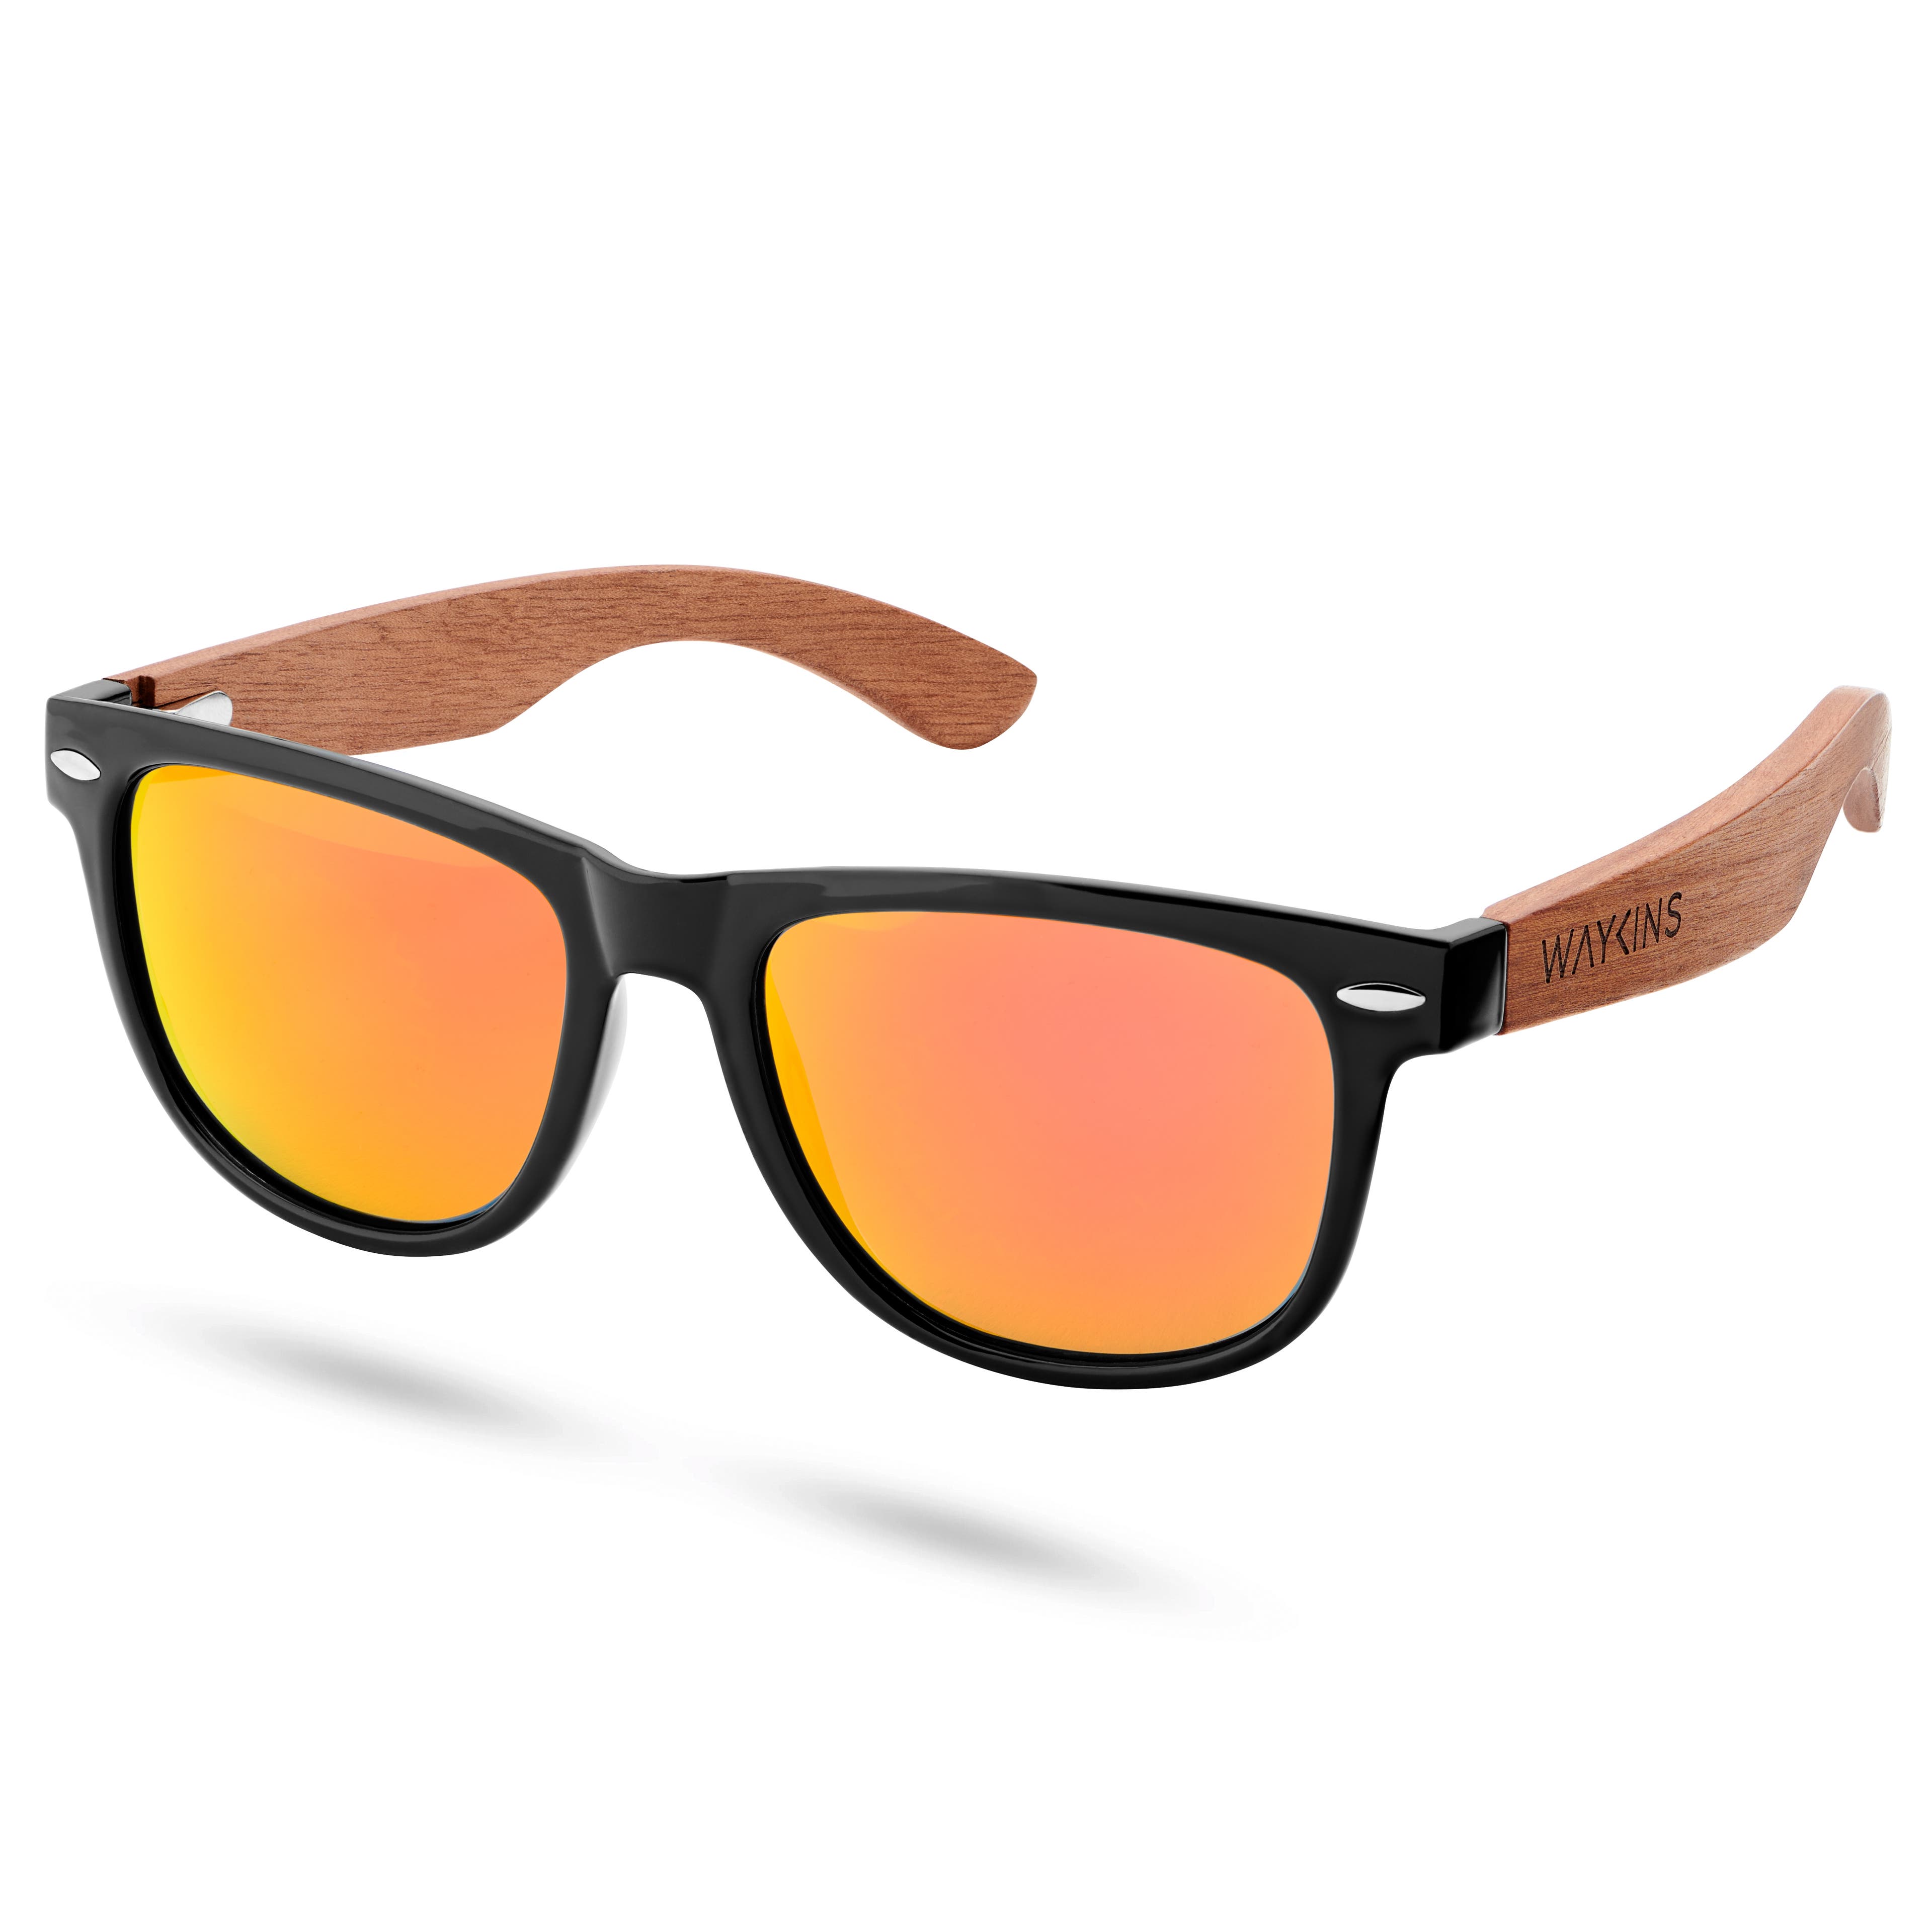 Black & Brown Wooden Sunglasses